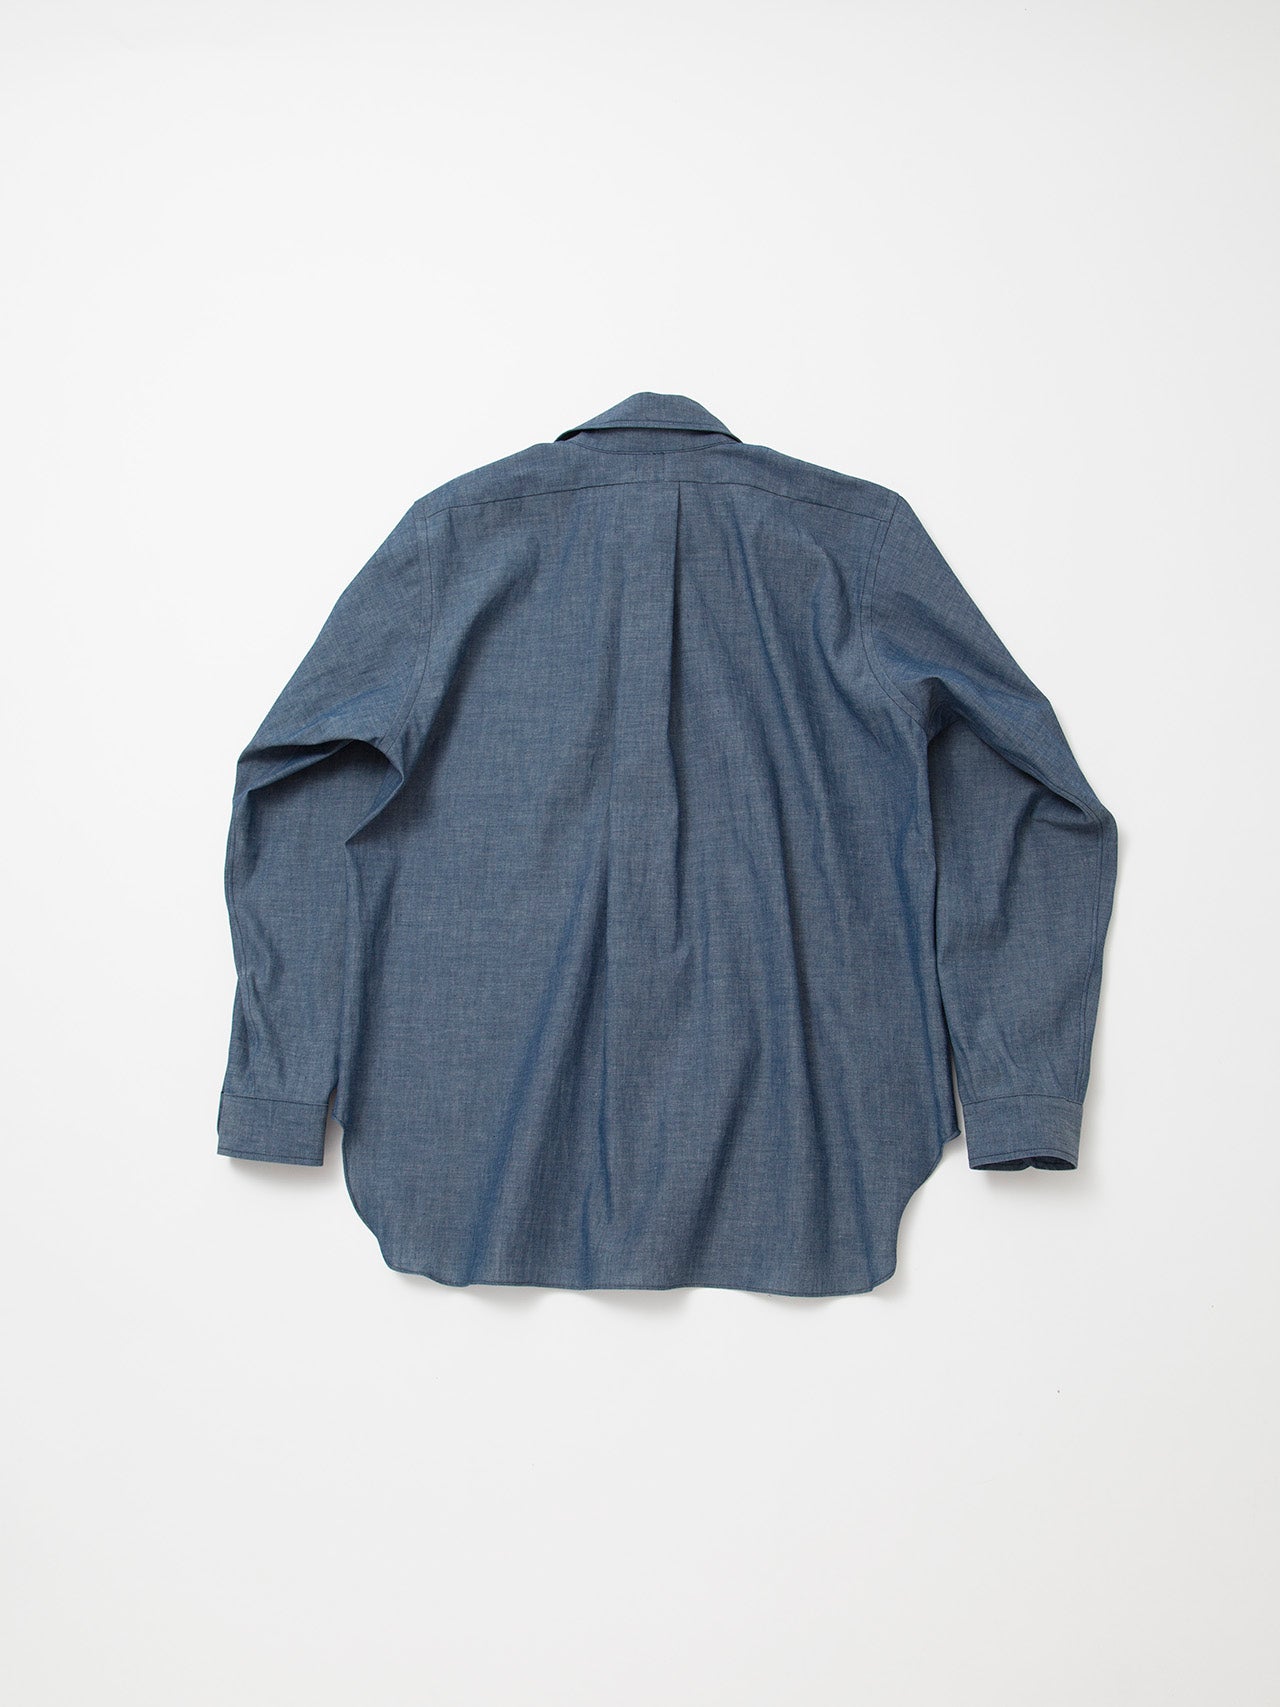 CS005 - CORONA・White Collar Work Shirt / Cotton Blue Chambray